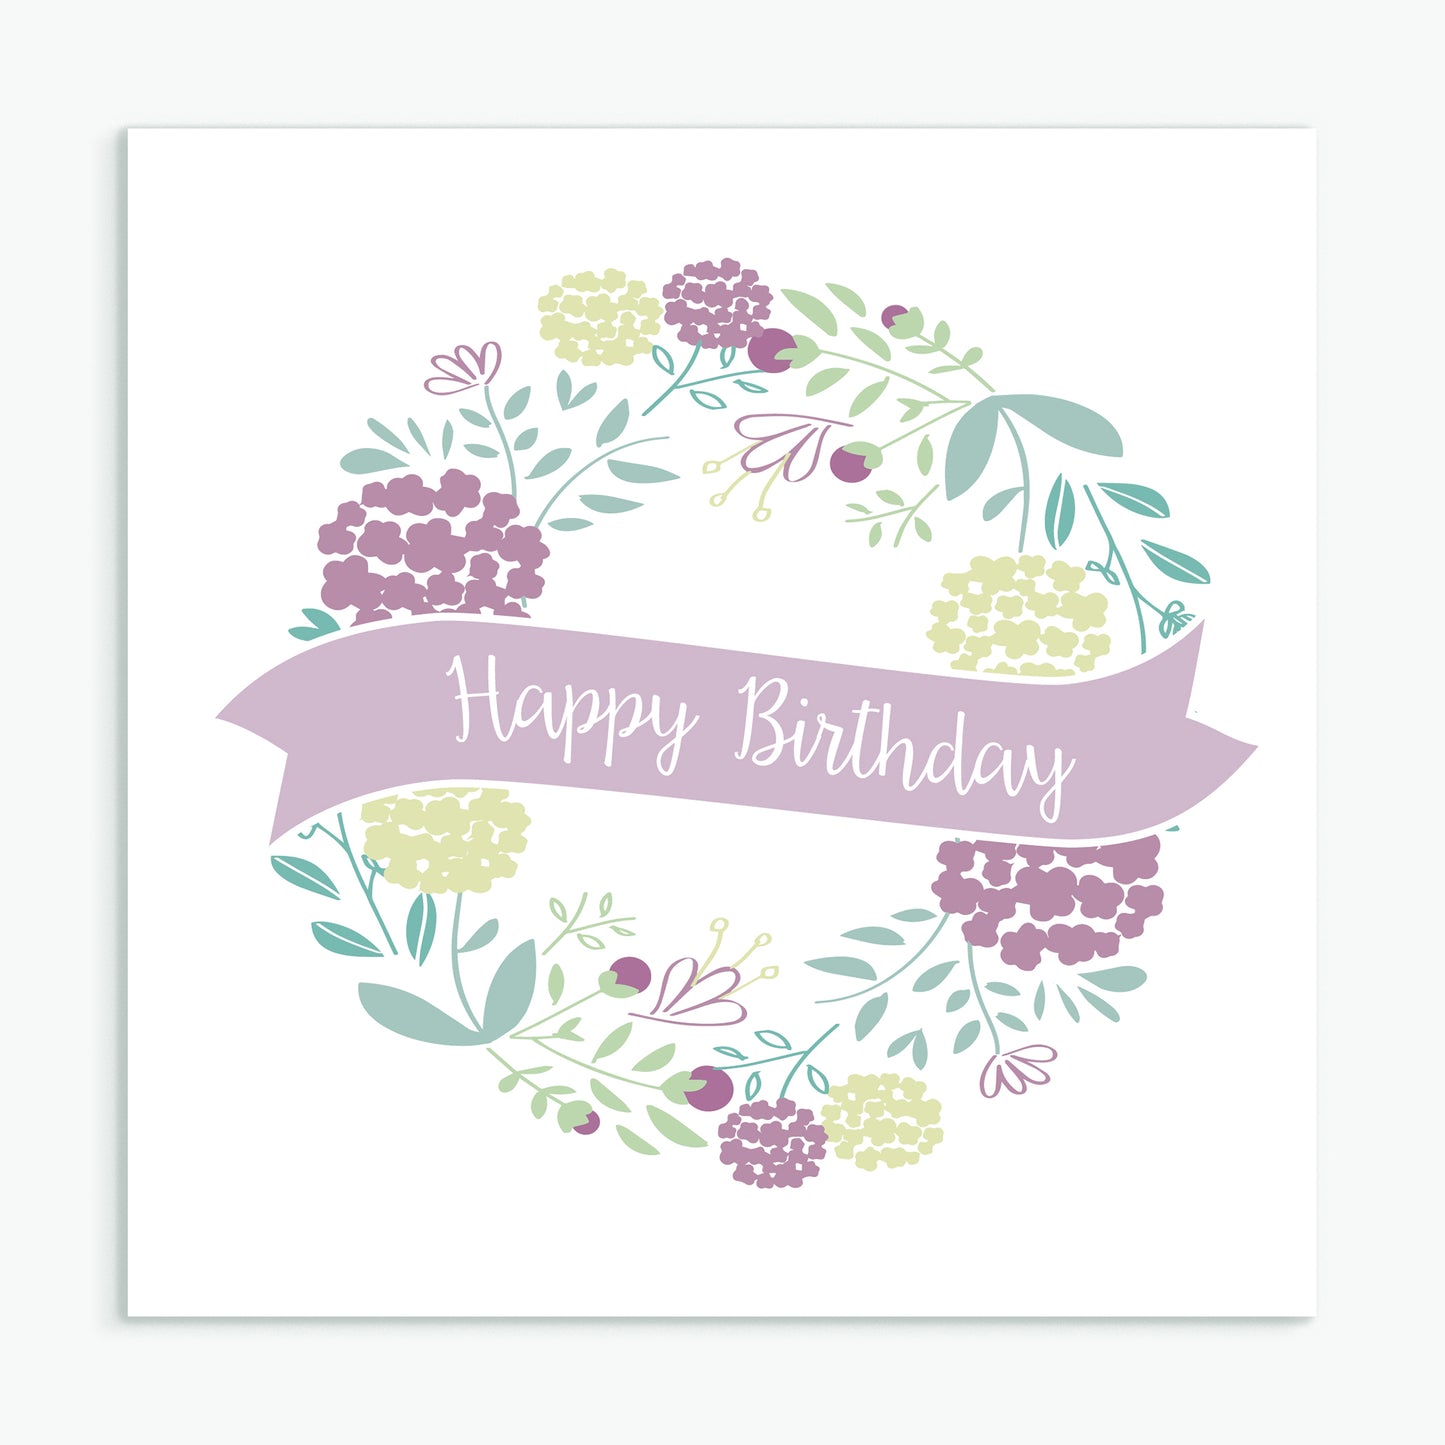 'Happy Birthday' by Preditos - Greeting Card